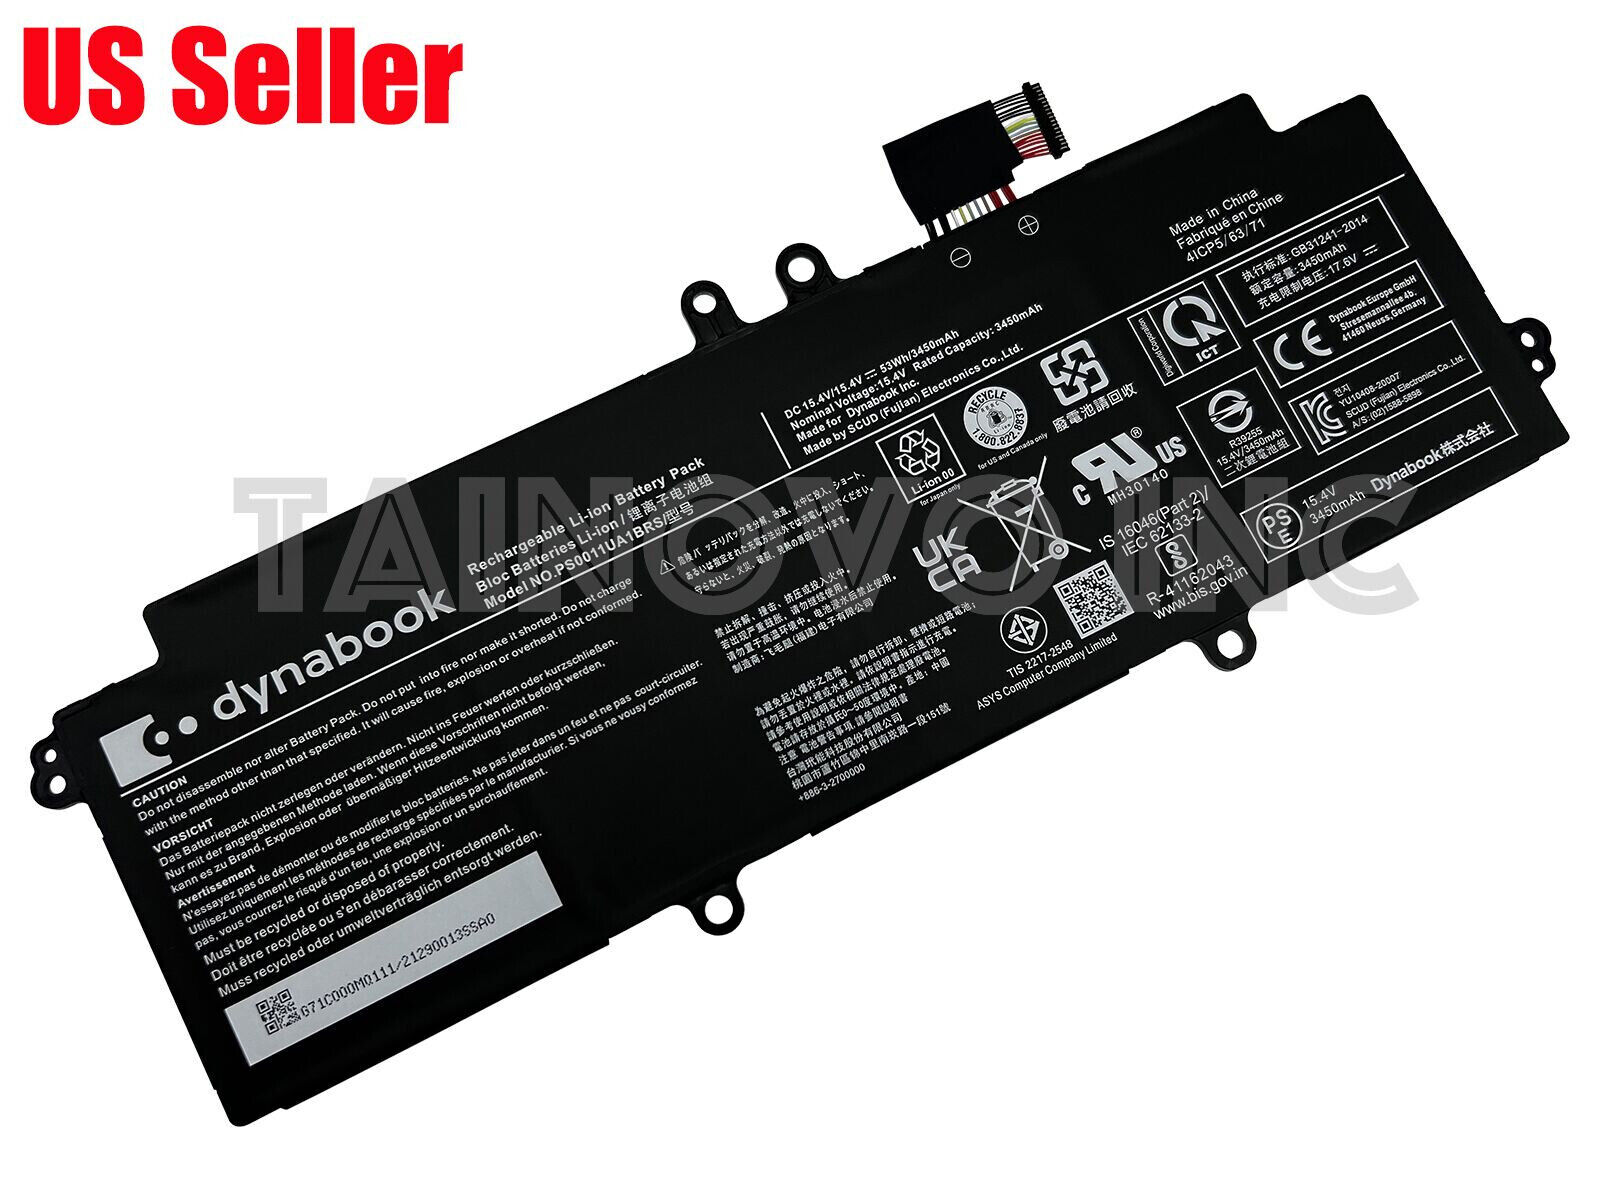 Genuine PS0011UA1BRS Battery for Toshiba Dynabook Portege X30L-J PCR10A-009003